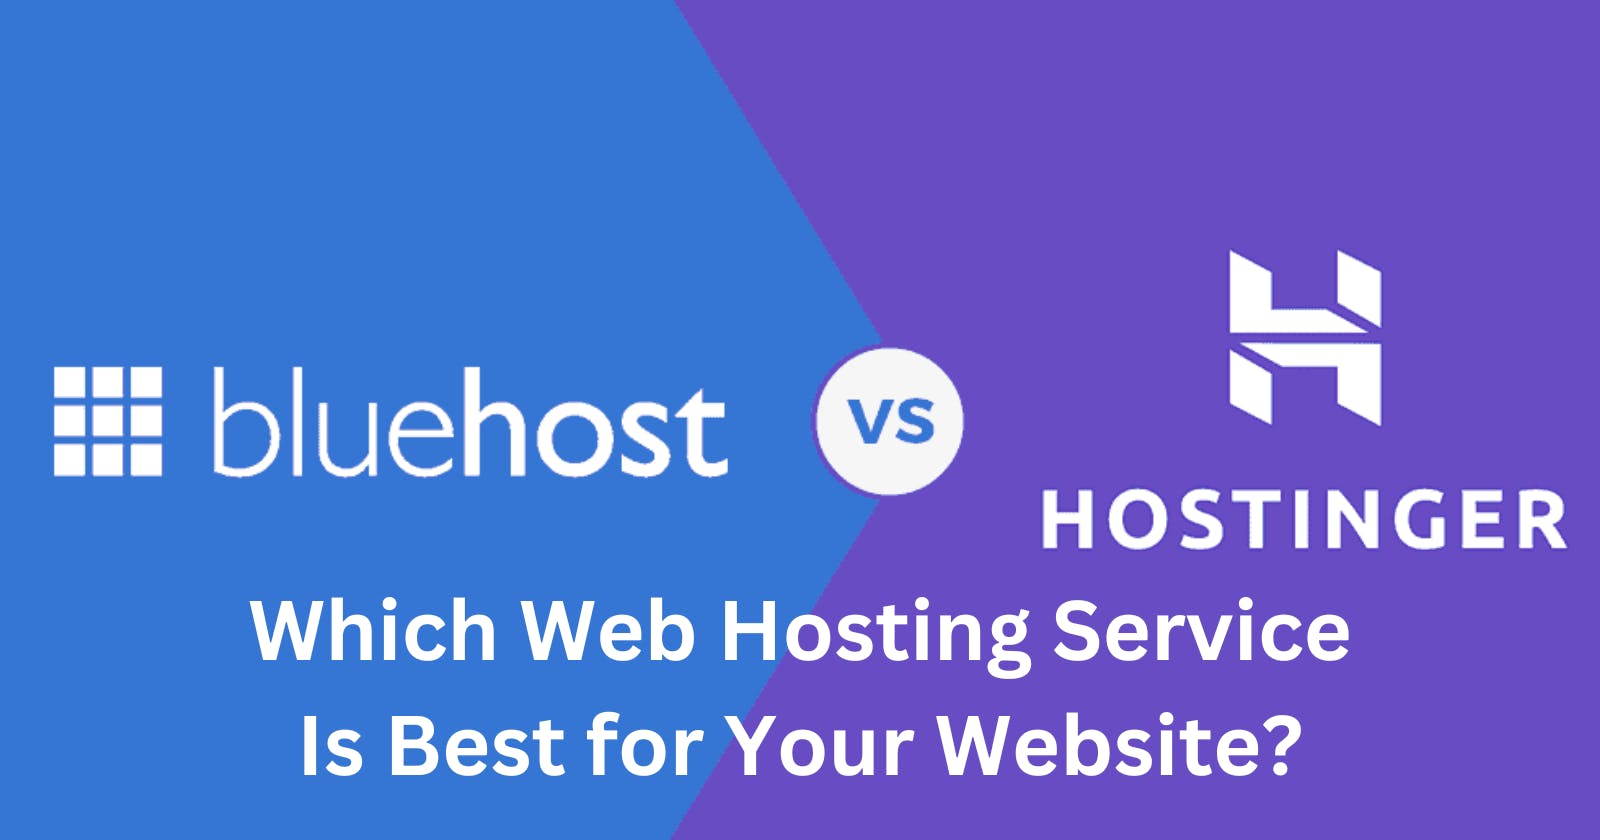 Hostinger vs Bluehost: Which Web Hosting Service Is Best for Your Website?